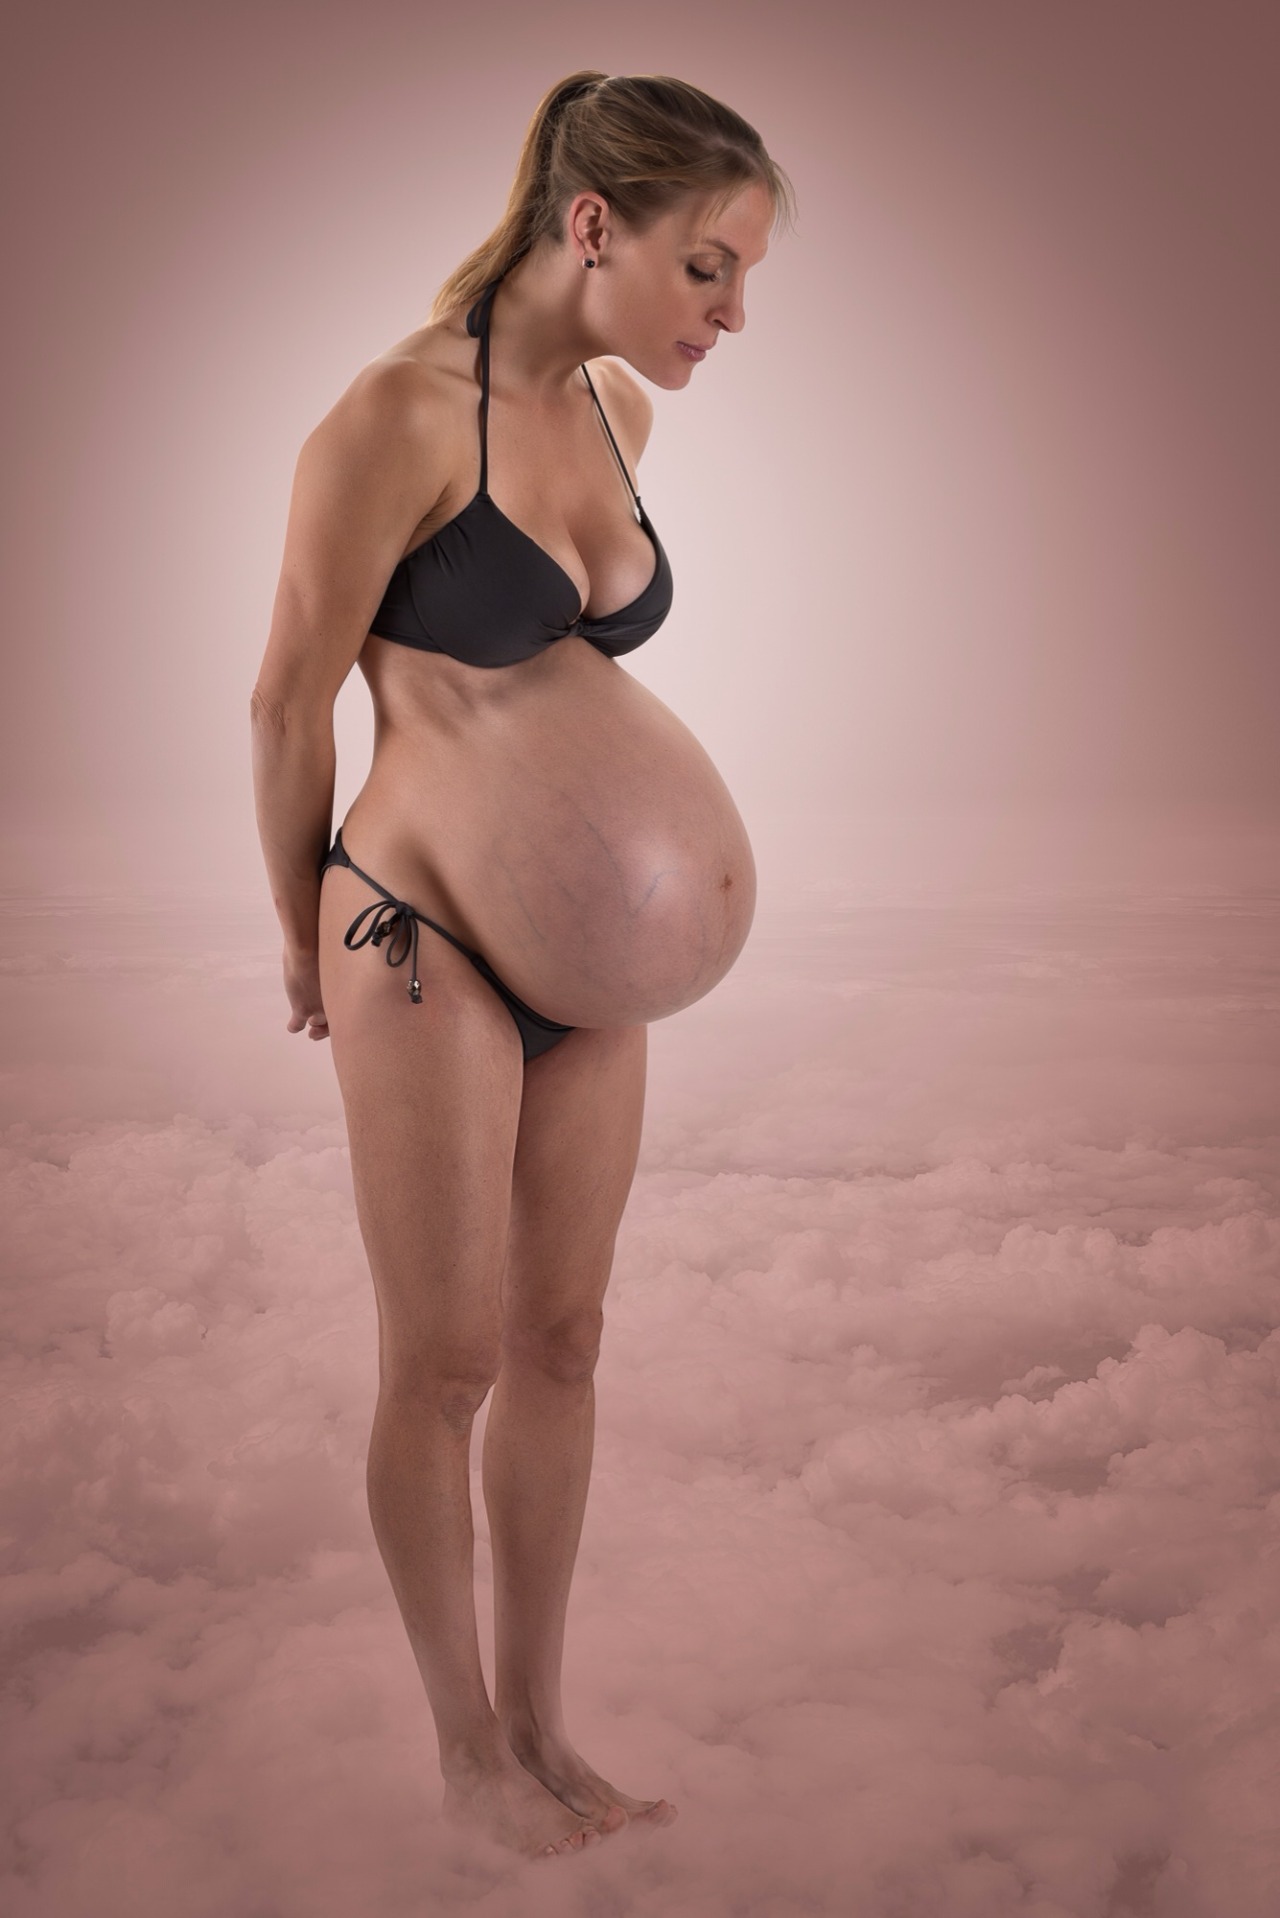 Pregnant die reportage